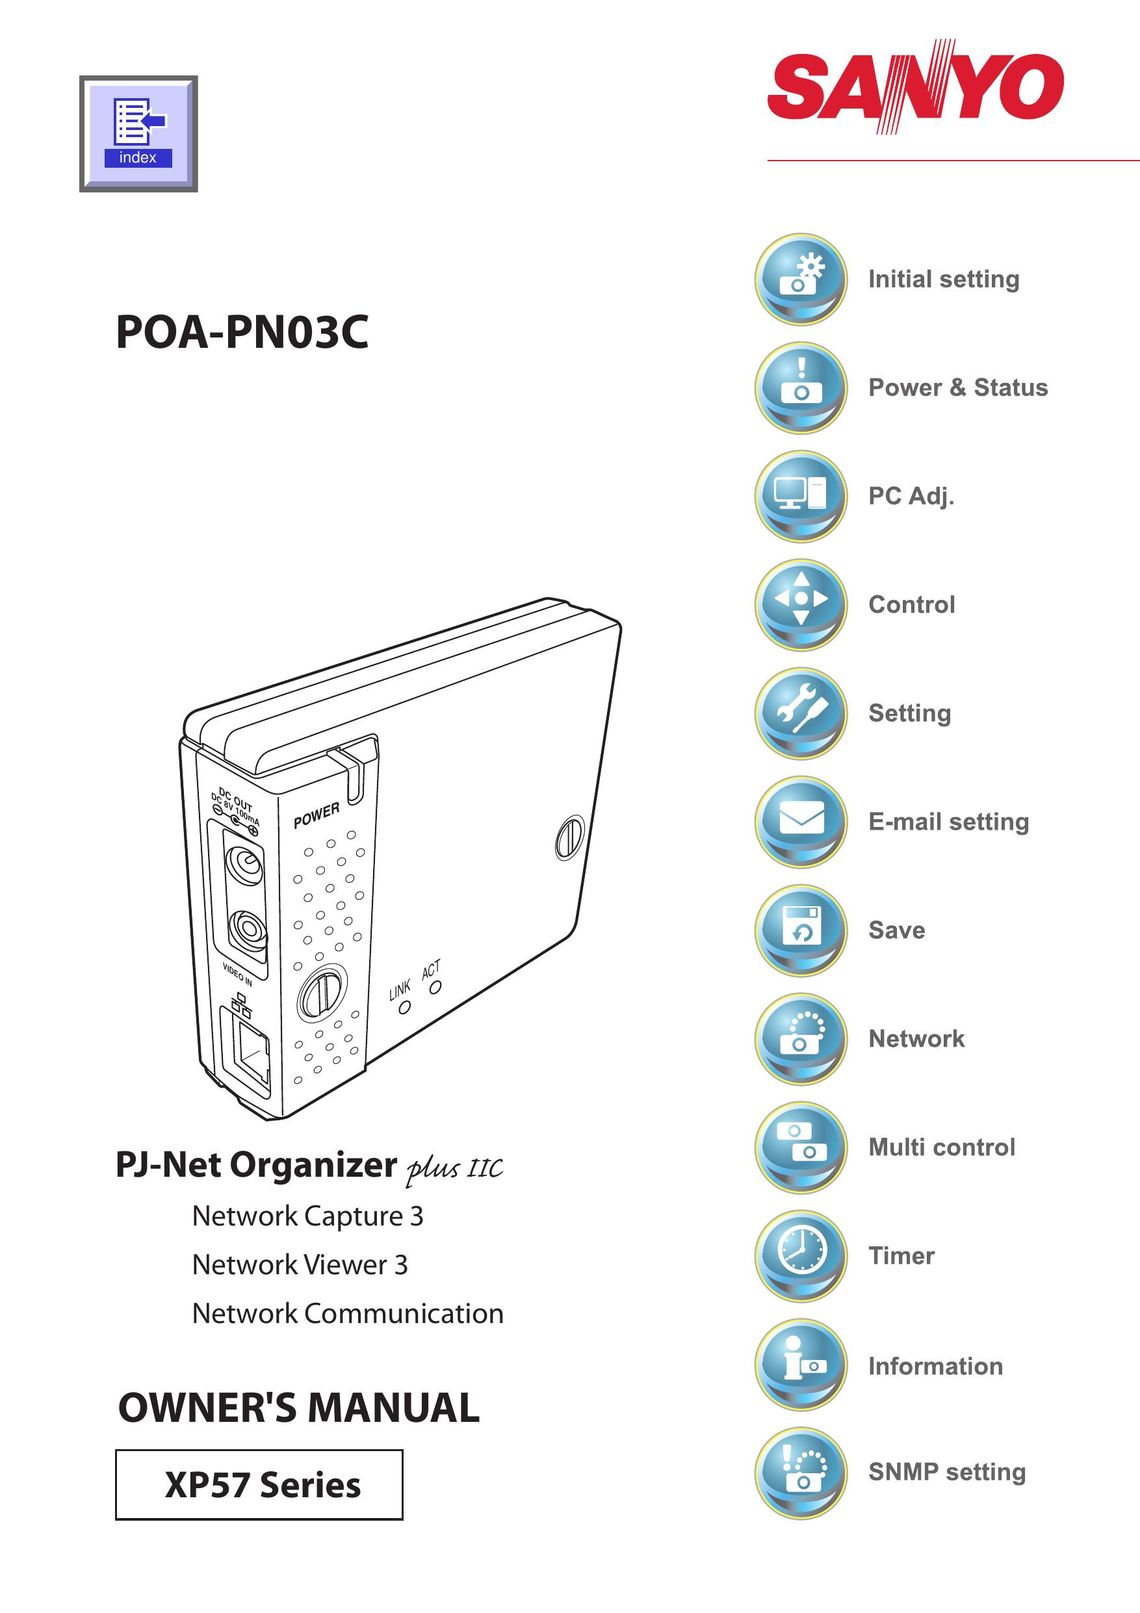 Sanyo POA-PN03C Network Card User Manual